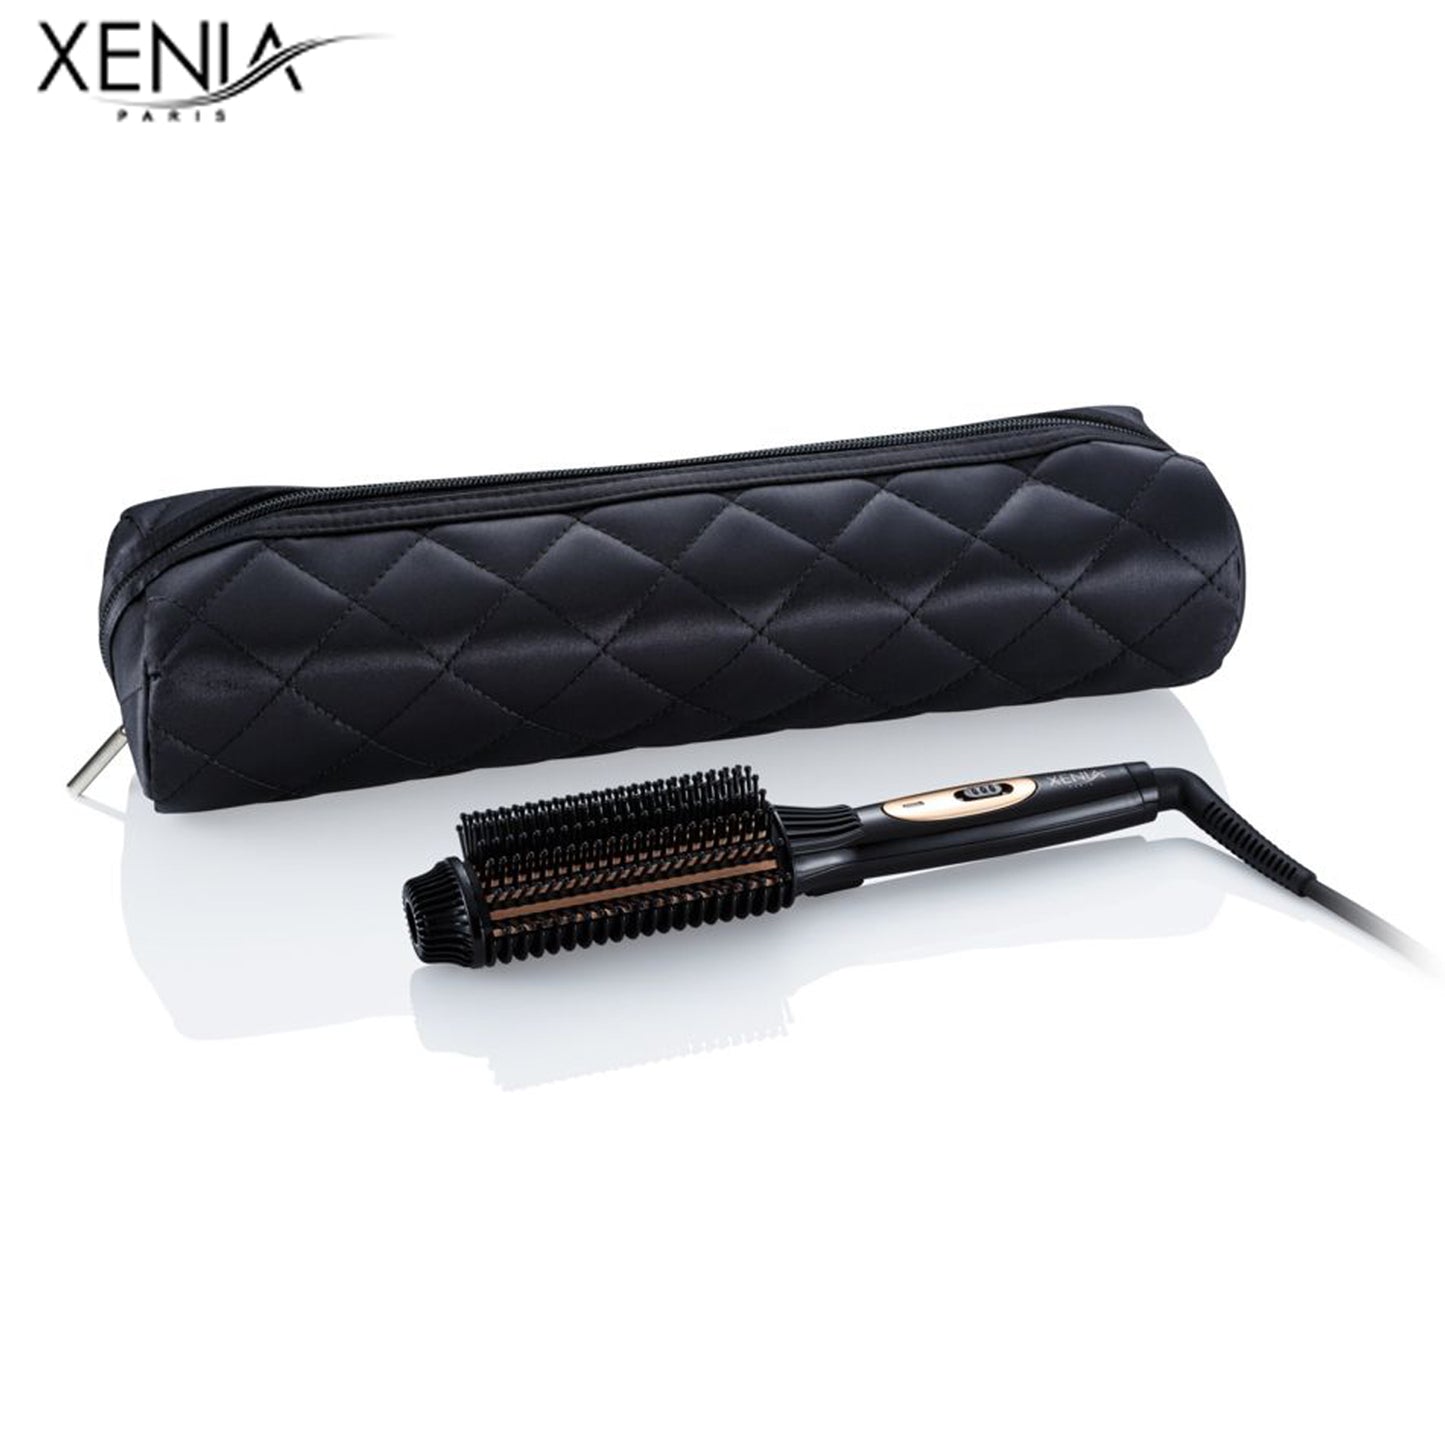 Xenia Paris TL-291221: Mira Brush Comb